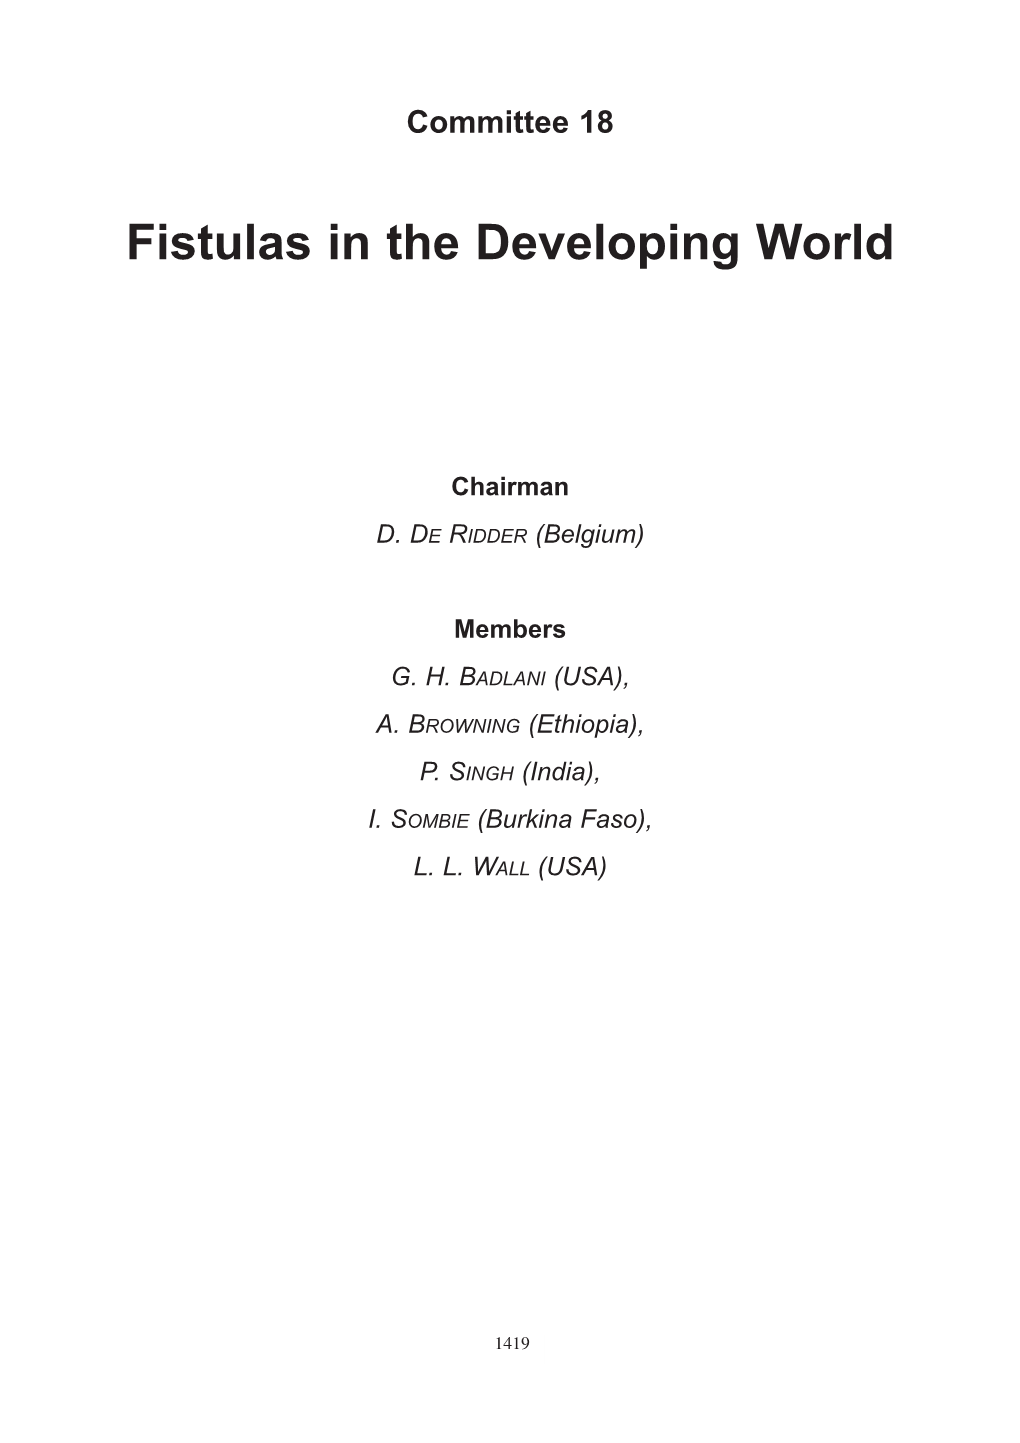 Fistulas in the Developing World